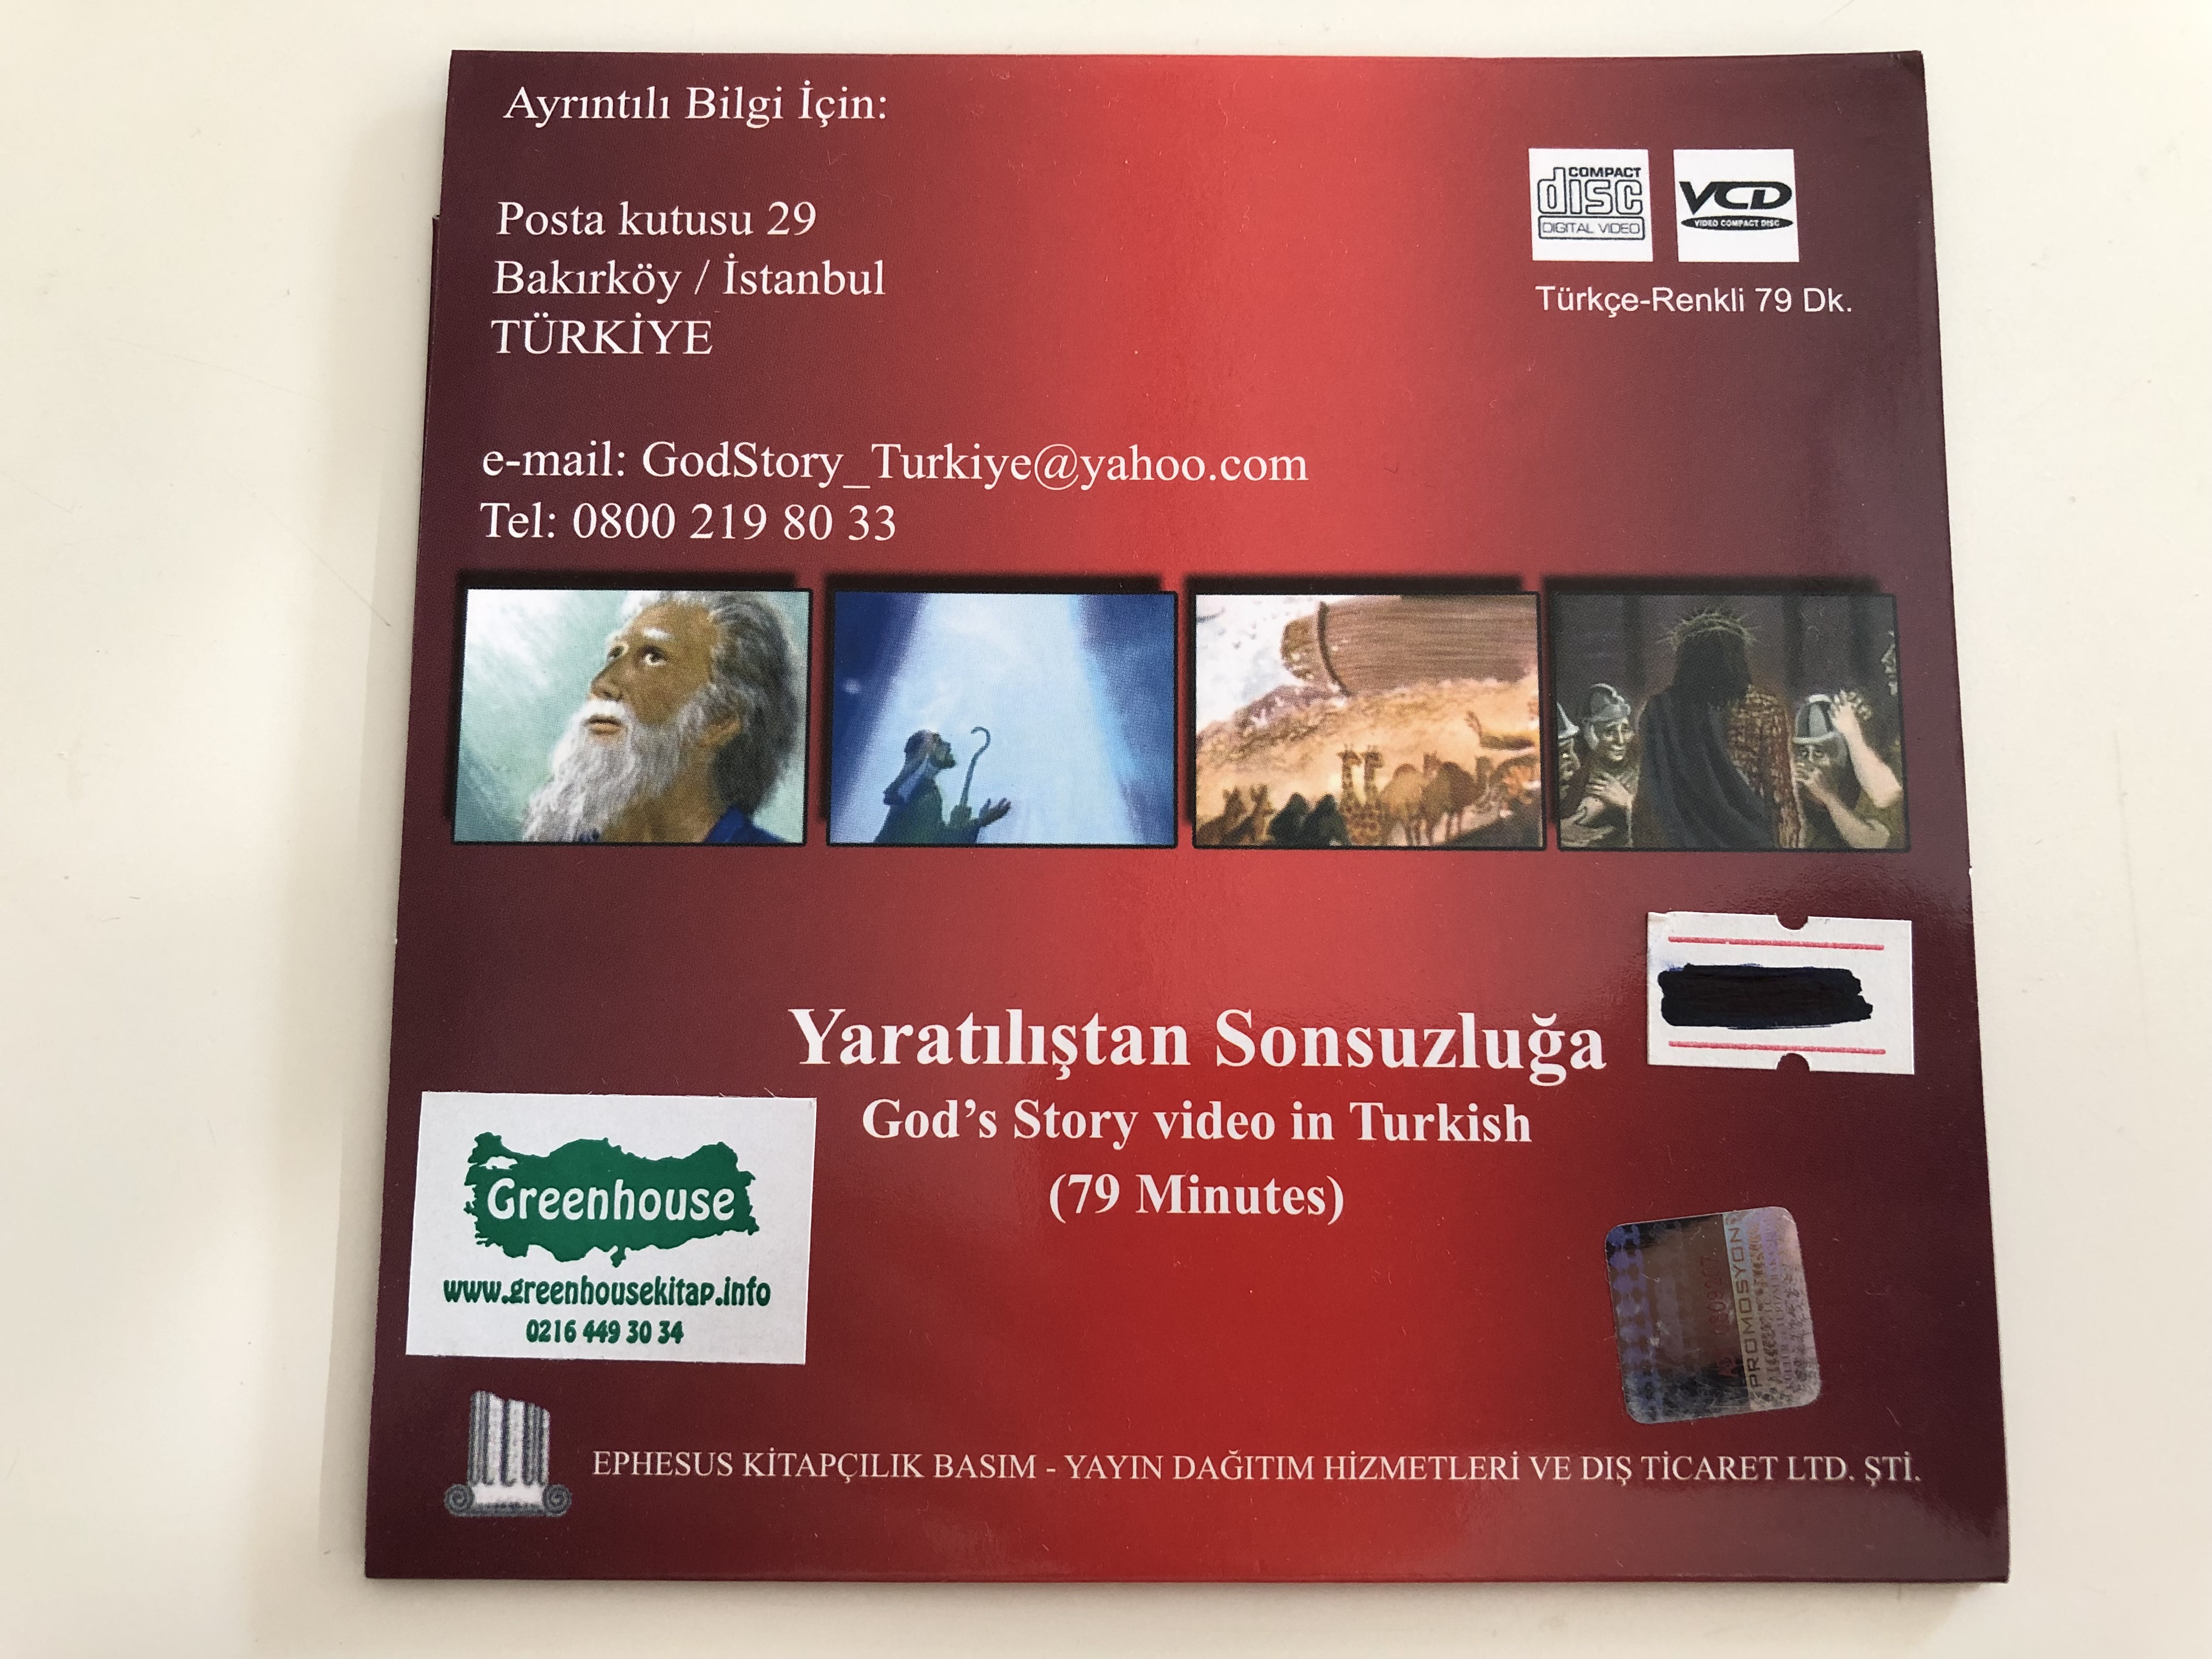 yaratili-tan-sonsuzlu-a-from-creation-to-eternity-god-s-story-video-in-turkish-language-ephesus-kitapcilik-basim-vcd-digital-video-cd-2-.jpg